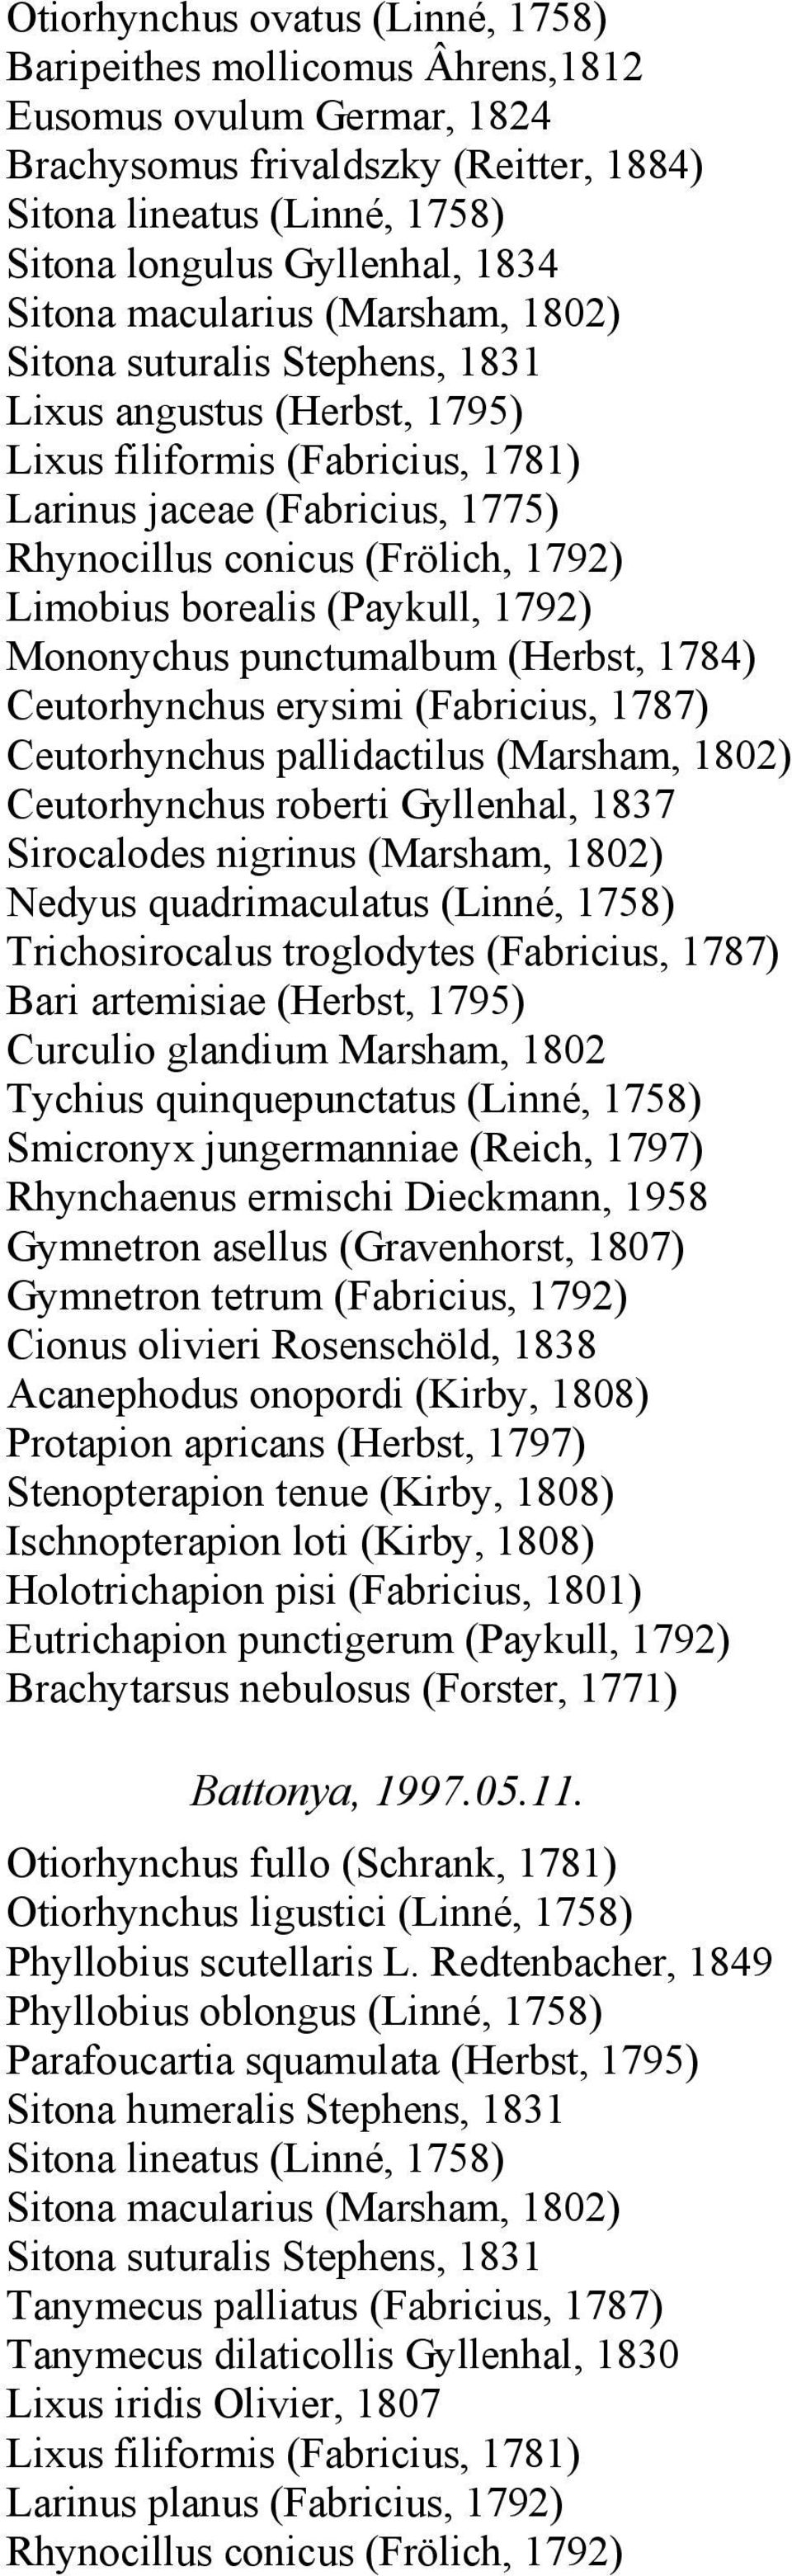 erysimi (Fabricius, 1787) Ceutorhynchus pallidactilus (Marsham, 1802) Ceutorhynchus roberti Gyllenhal, 1837 Sirocalodes nigrinus (Marsham, 1802) Trichosirocalus troglodytes (Fabricius, 1787) Bari